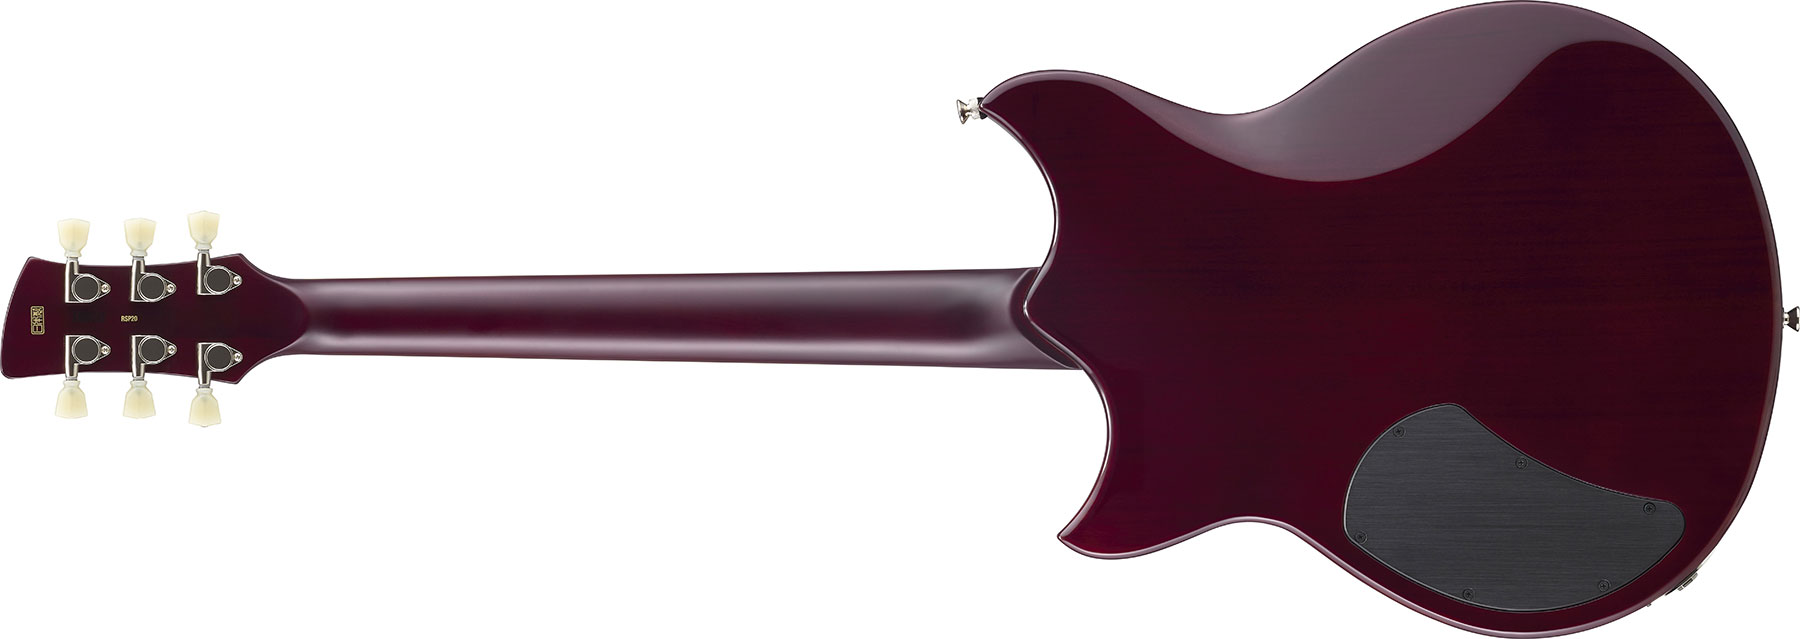 Yamaha Rss02t Revstar Standard 2p90 Ht Rw - Swift Blue - Double cut electric guitar - Variation 2